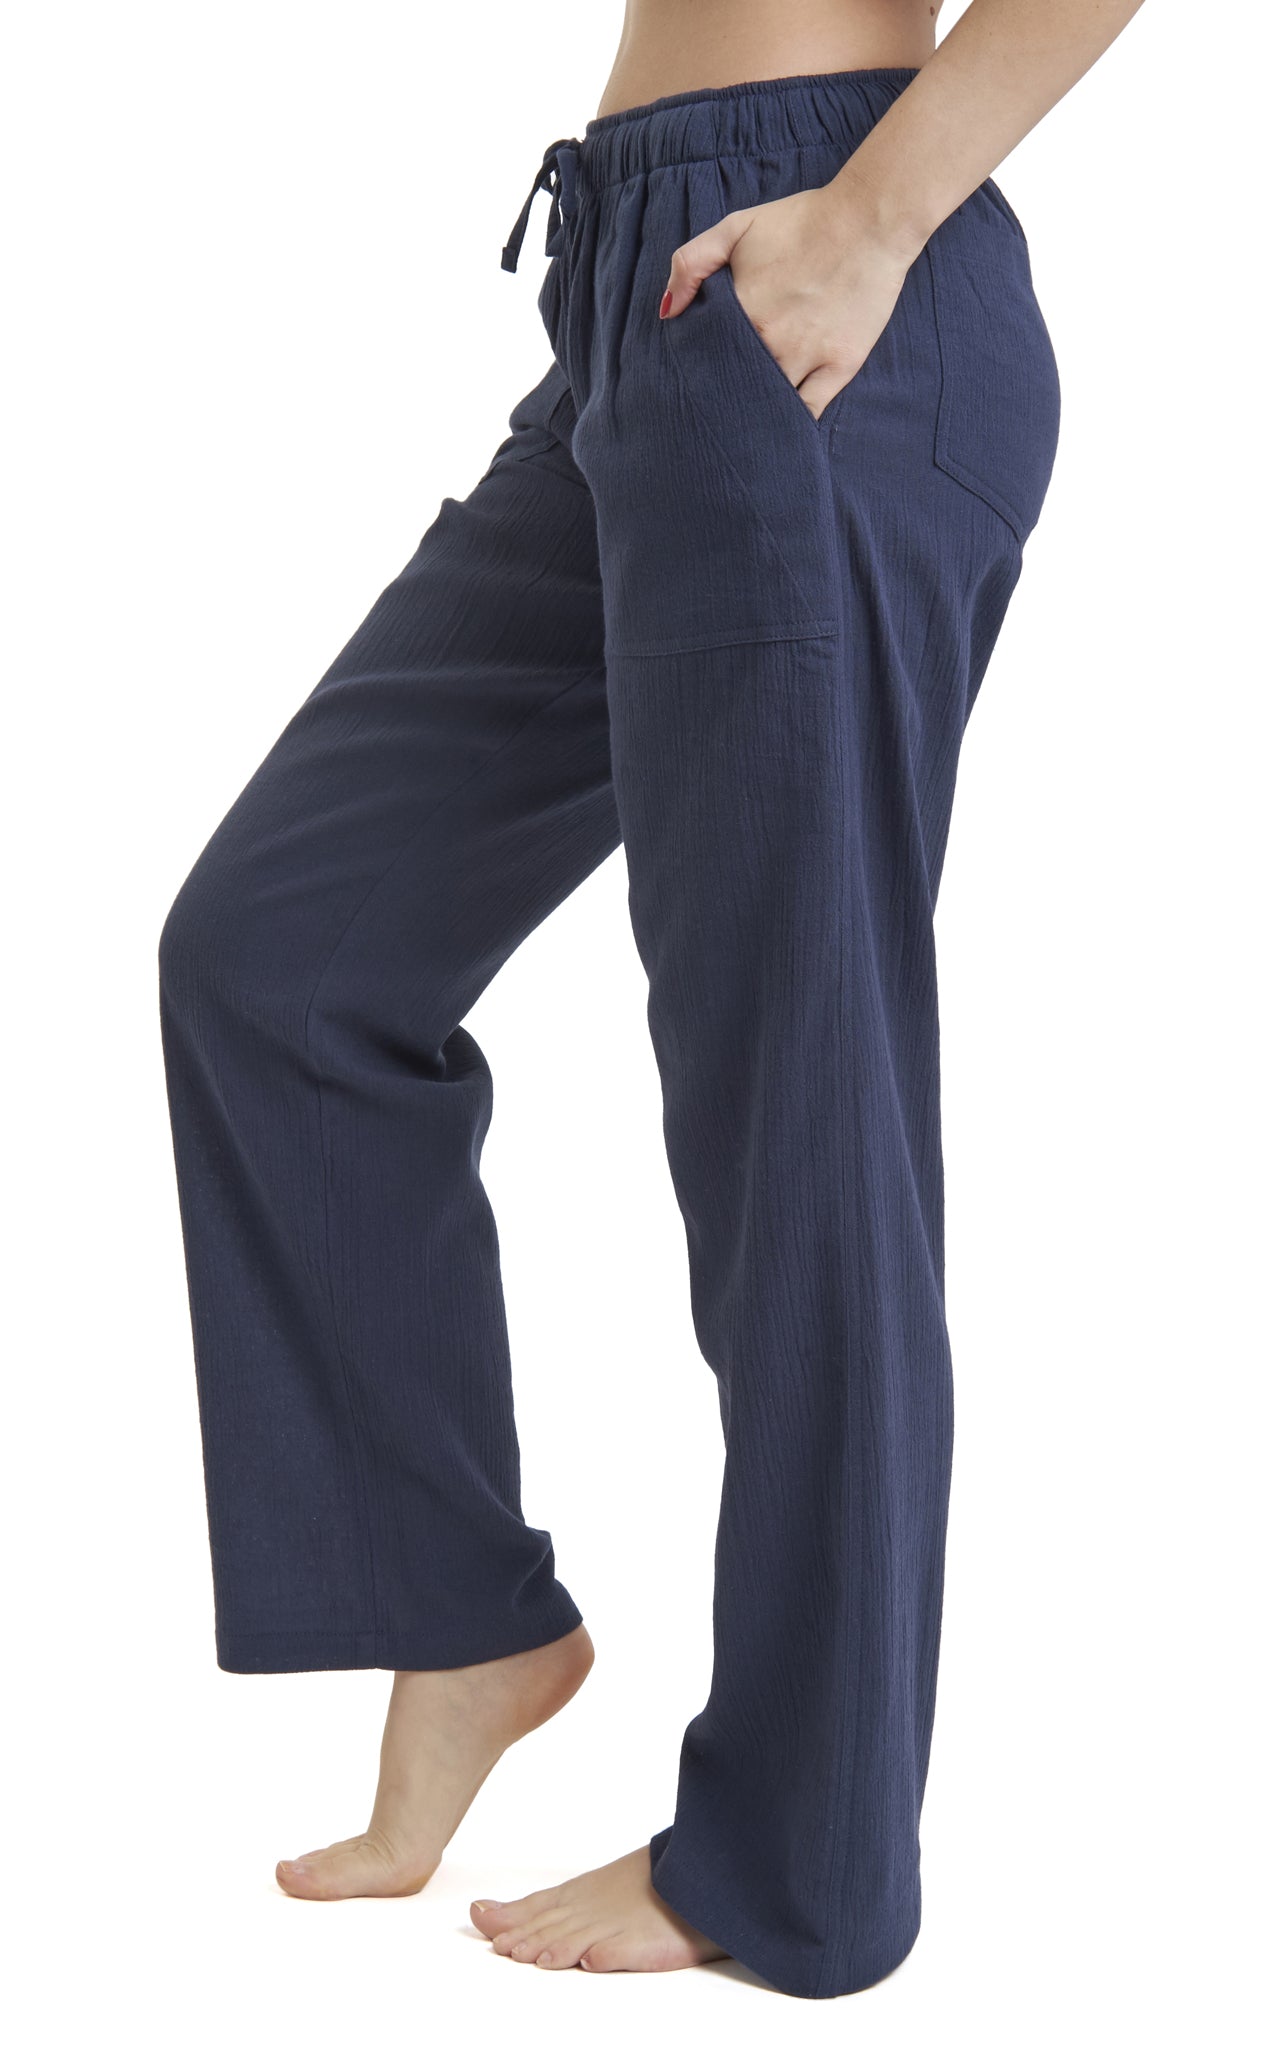 Women's Gauze Cotton PJ & Beach Pants with Pockets (Navy Blue) – J